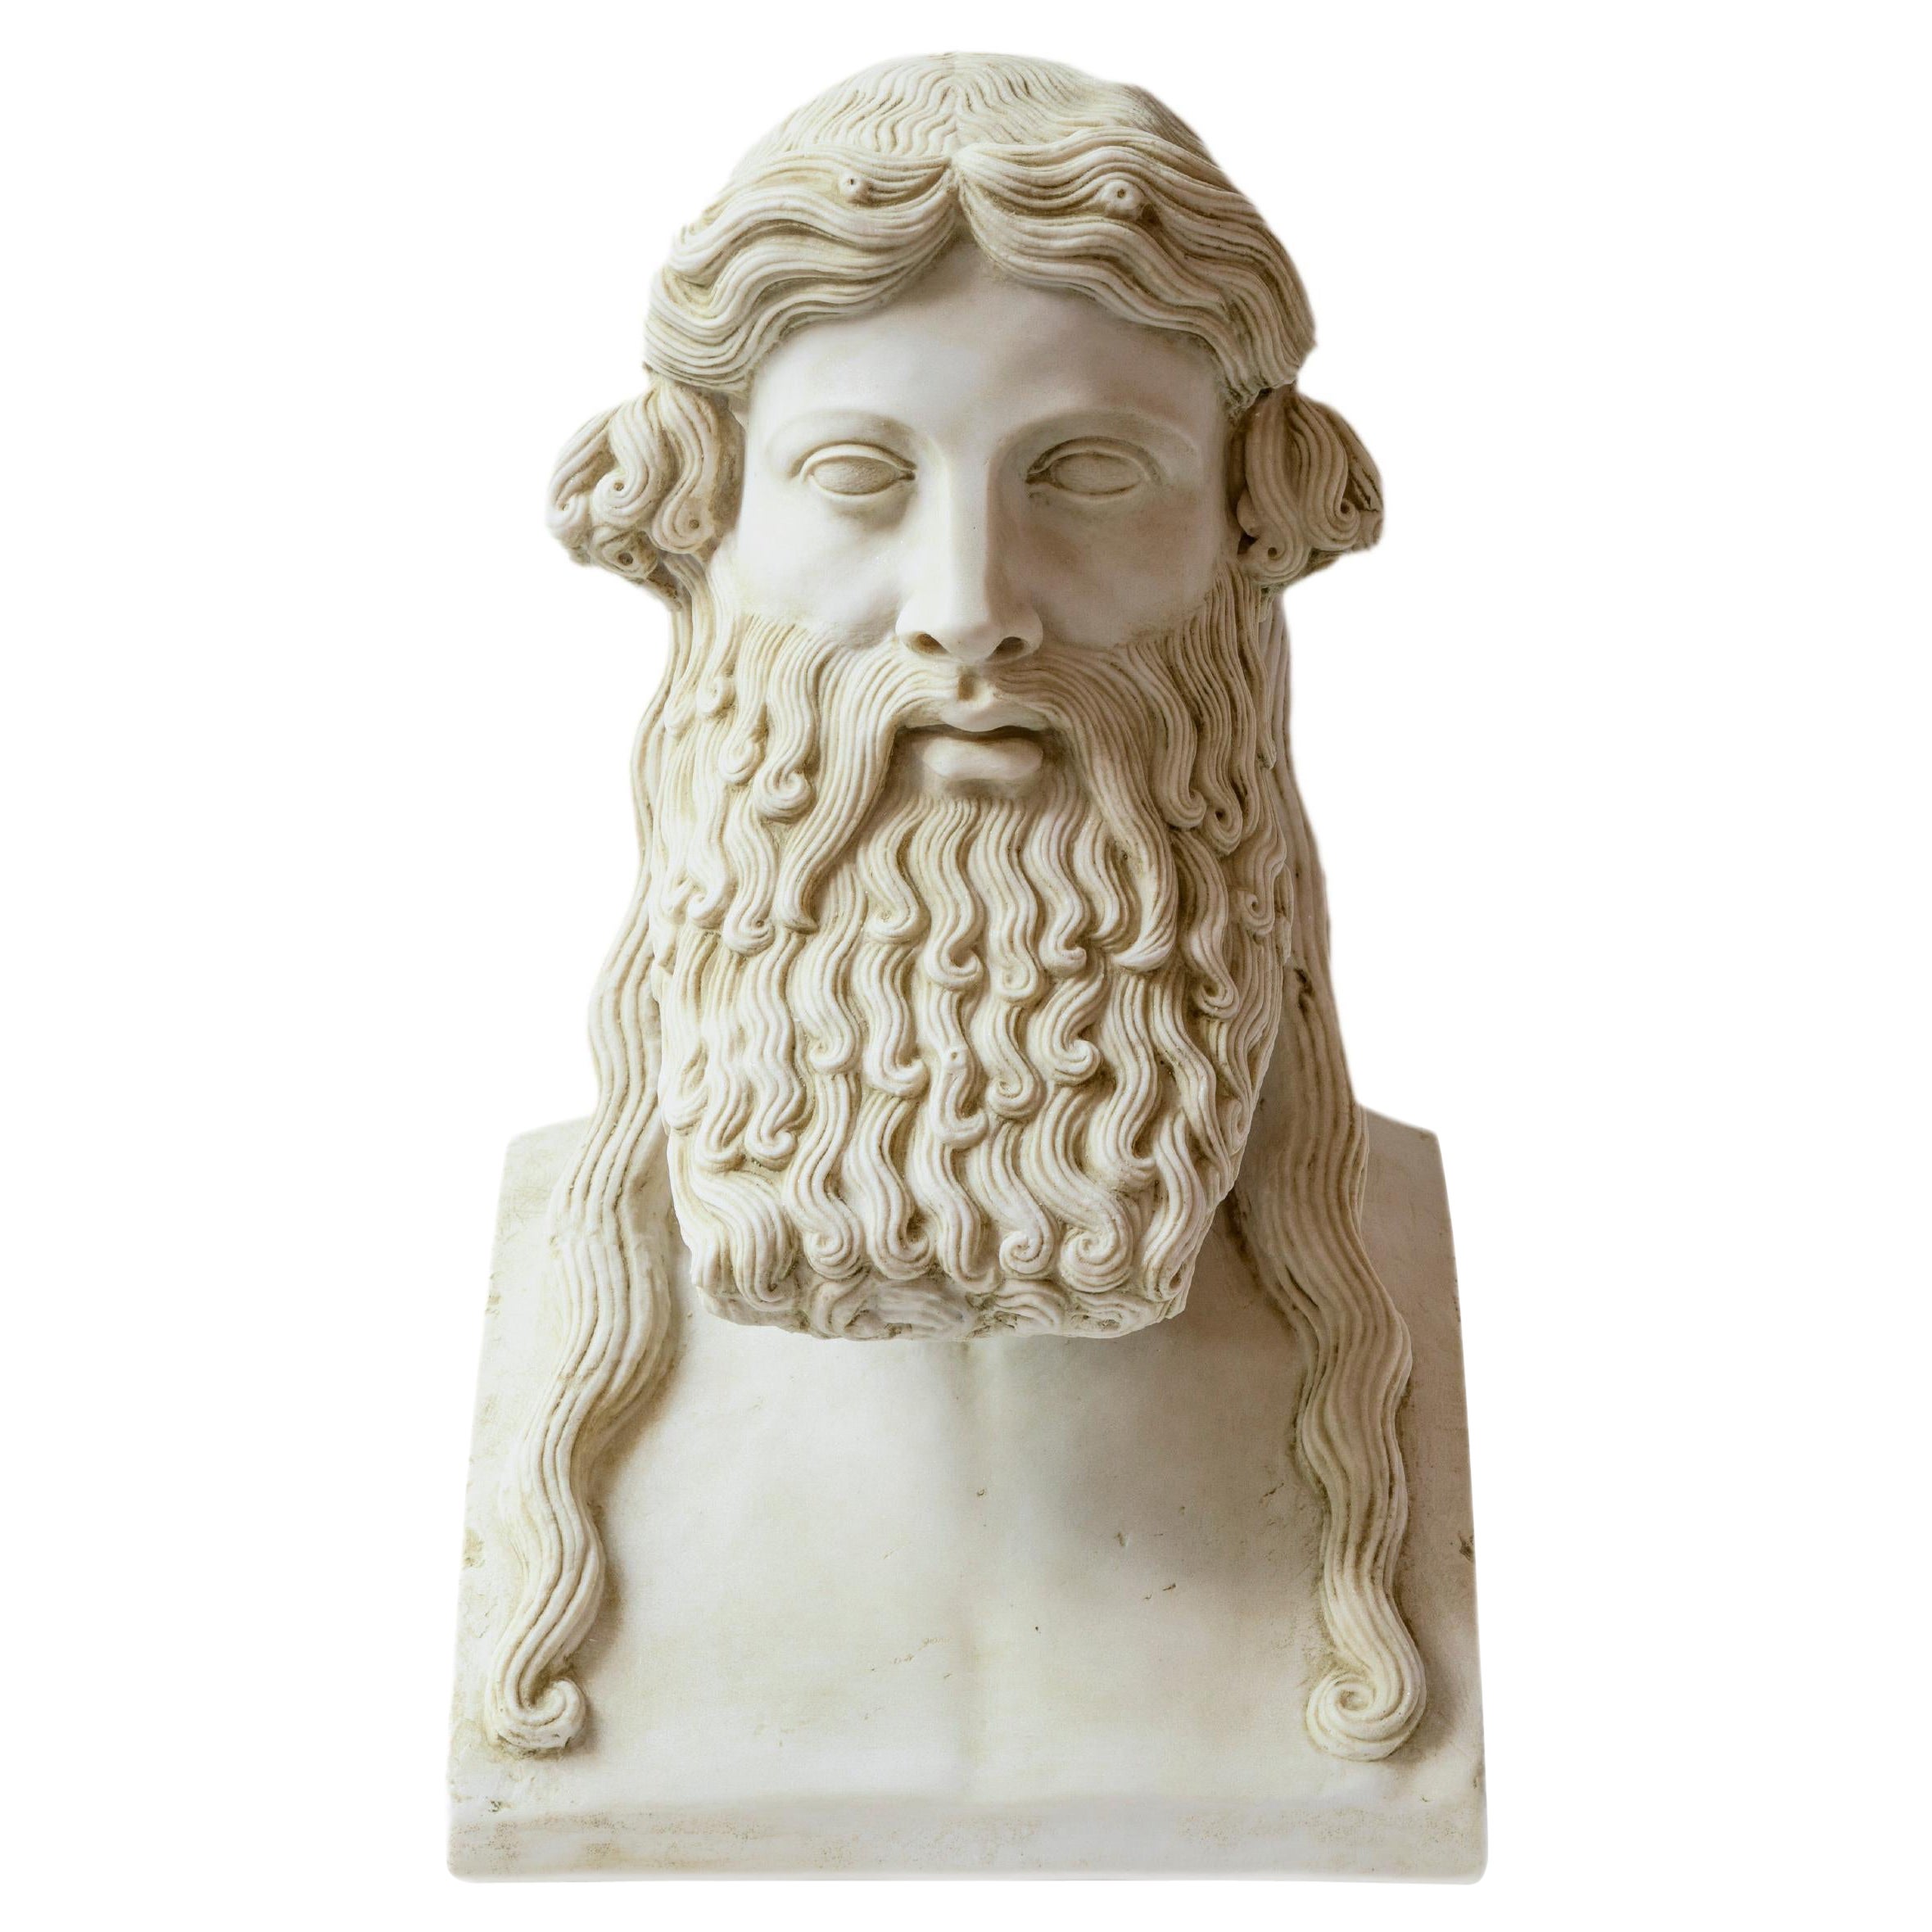 Bärtiger Hermes, hergestellt aus gepresstem Marmorpulver, Museum İzmir